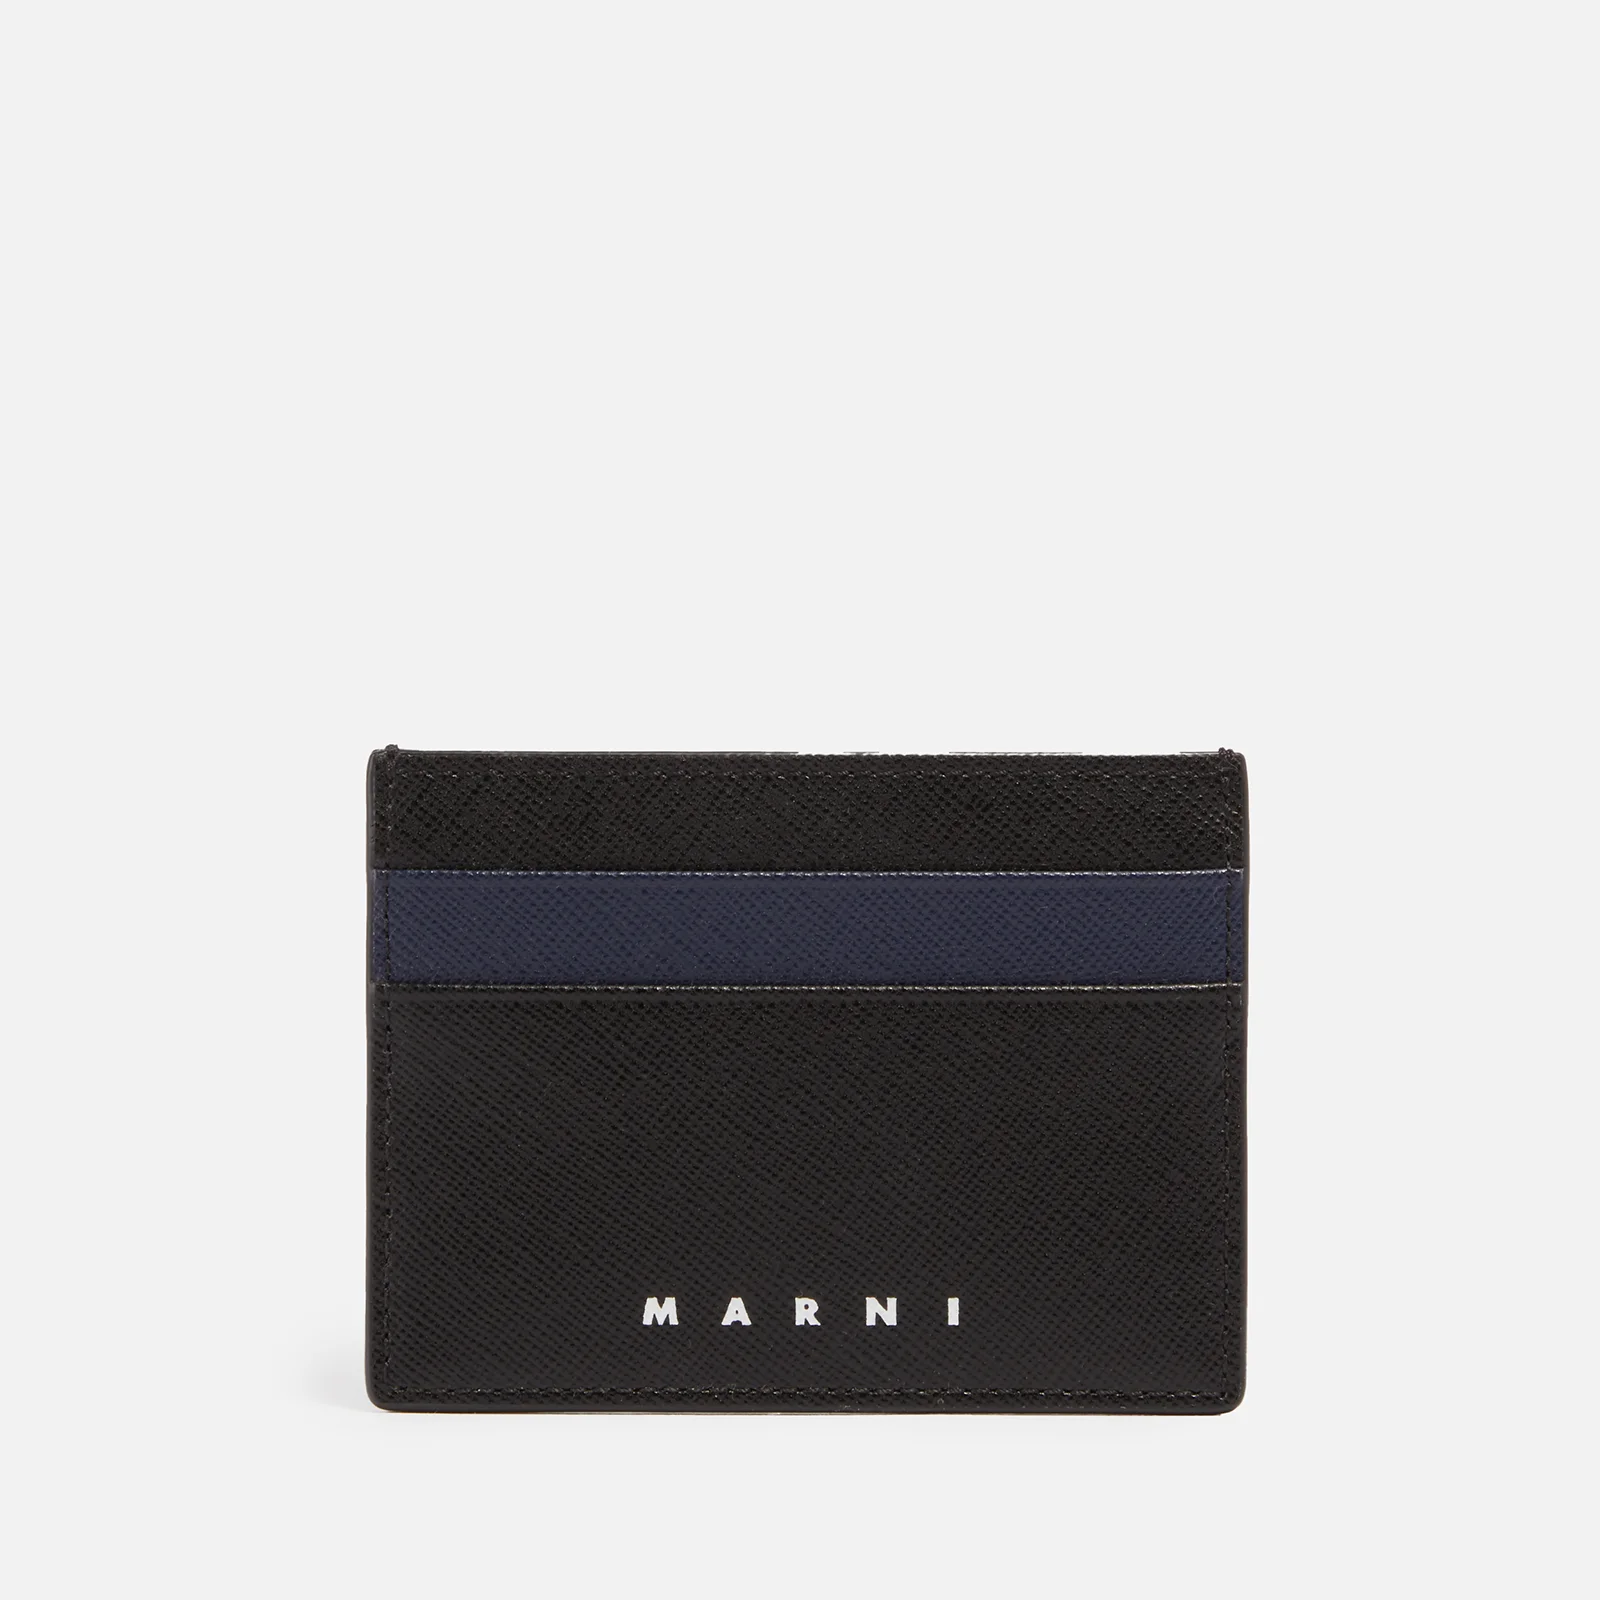 Marni Two-Tone Leather Card Holder Image 1